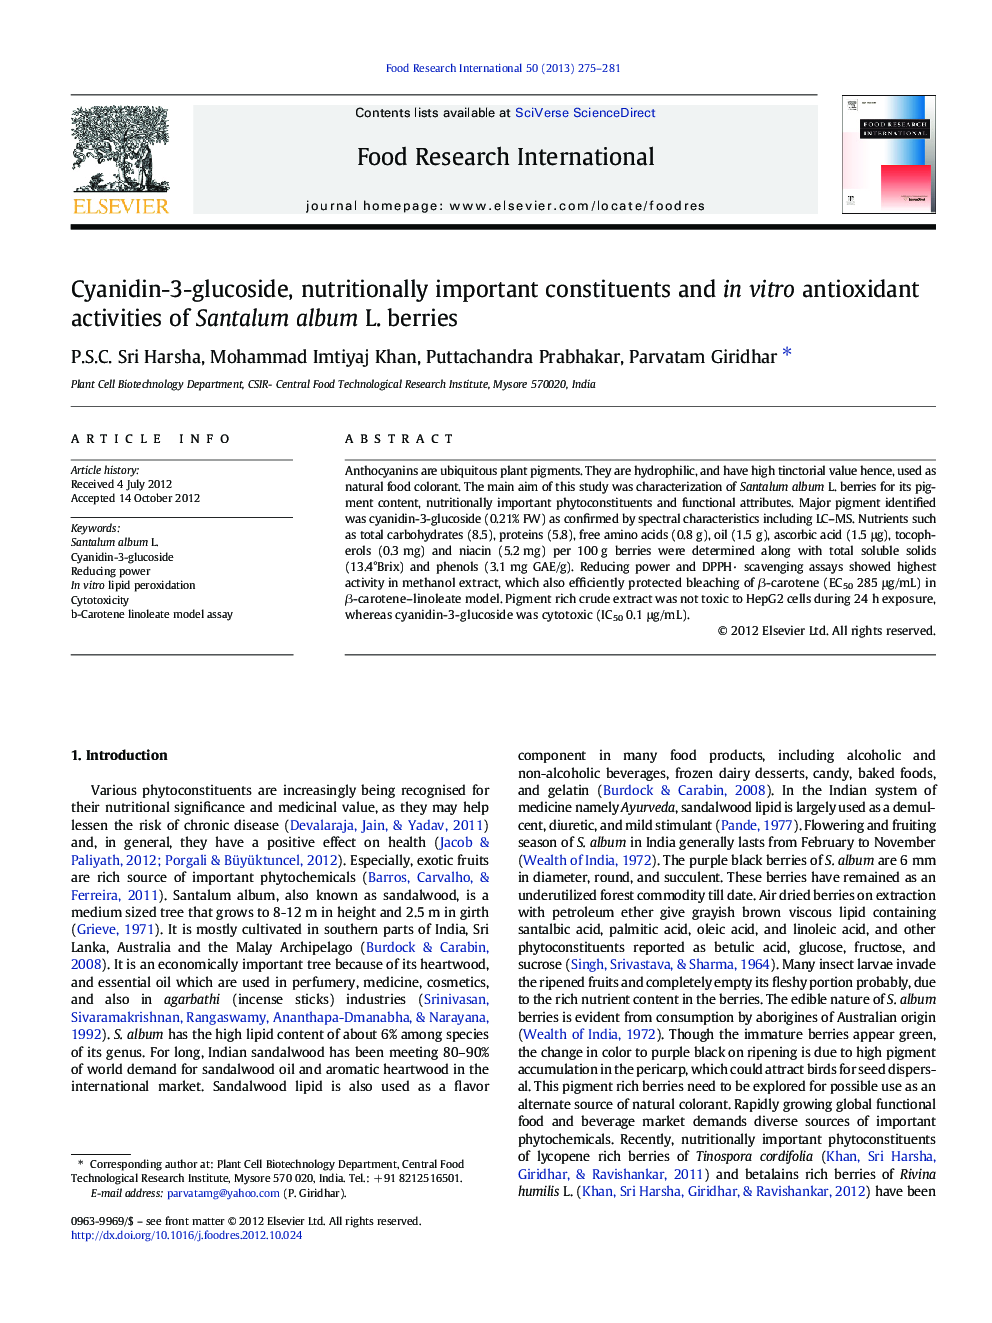 Cyanidin-3-glucoside, nutritionally important constituents and in vitro antioxidant activities of Santalum album L. berries